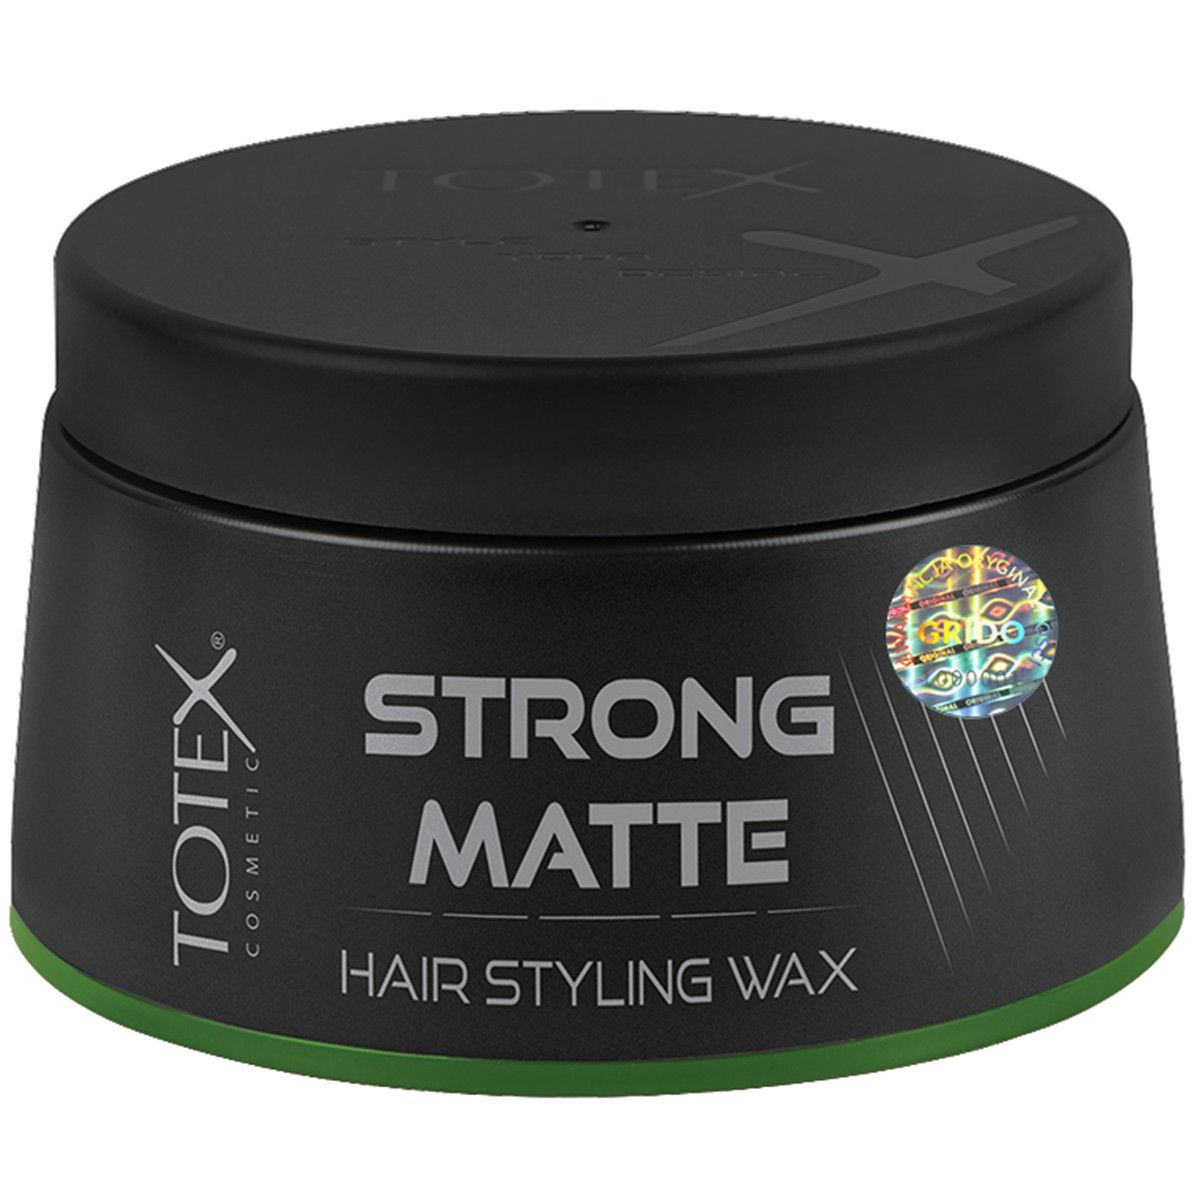 Totex Strong Matte Hair Styling Wax - matowy wosk do stylizacji o mocnym utrwaleniu, 150ml